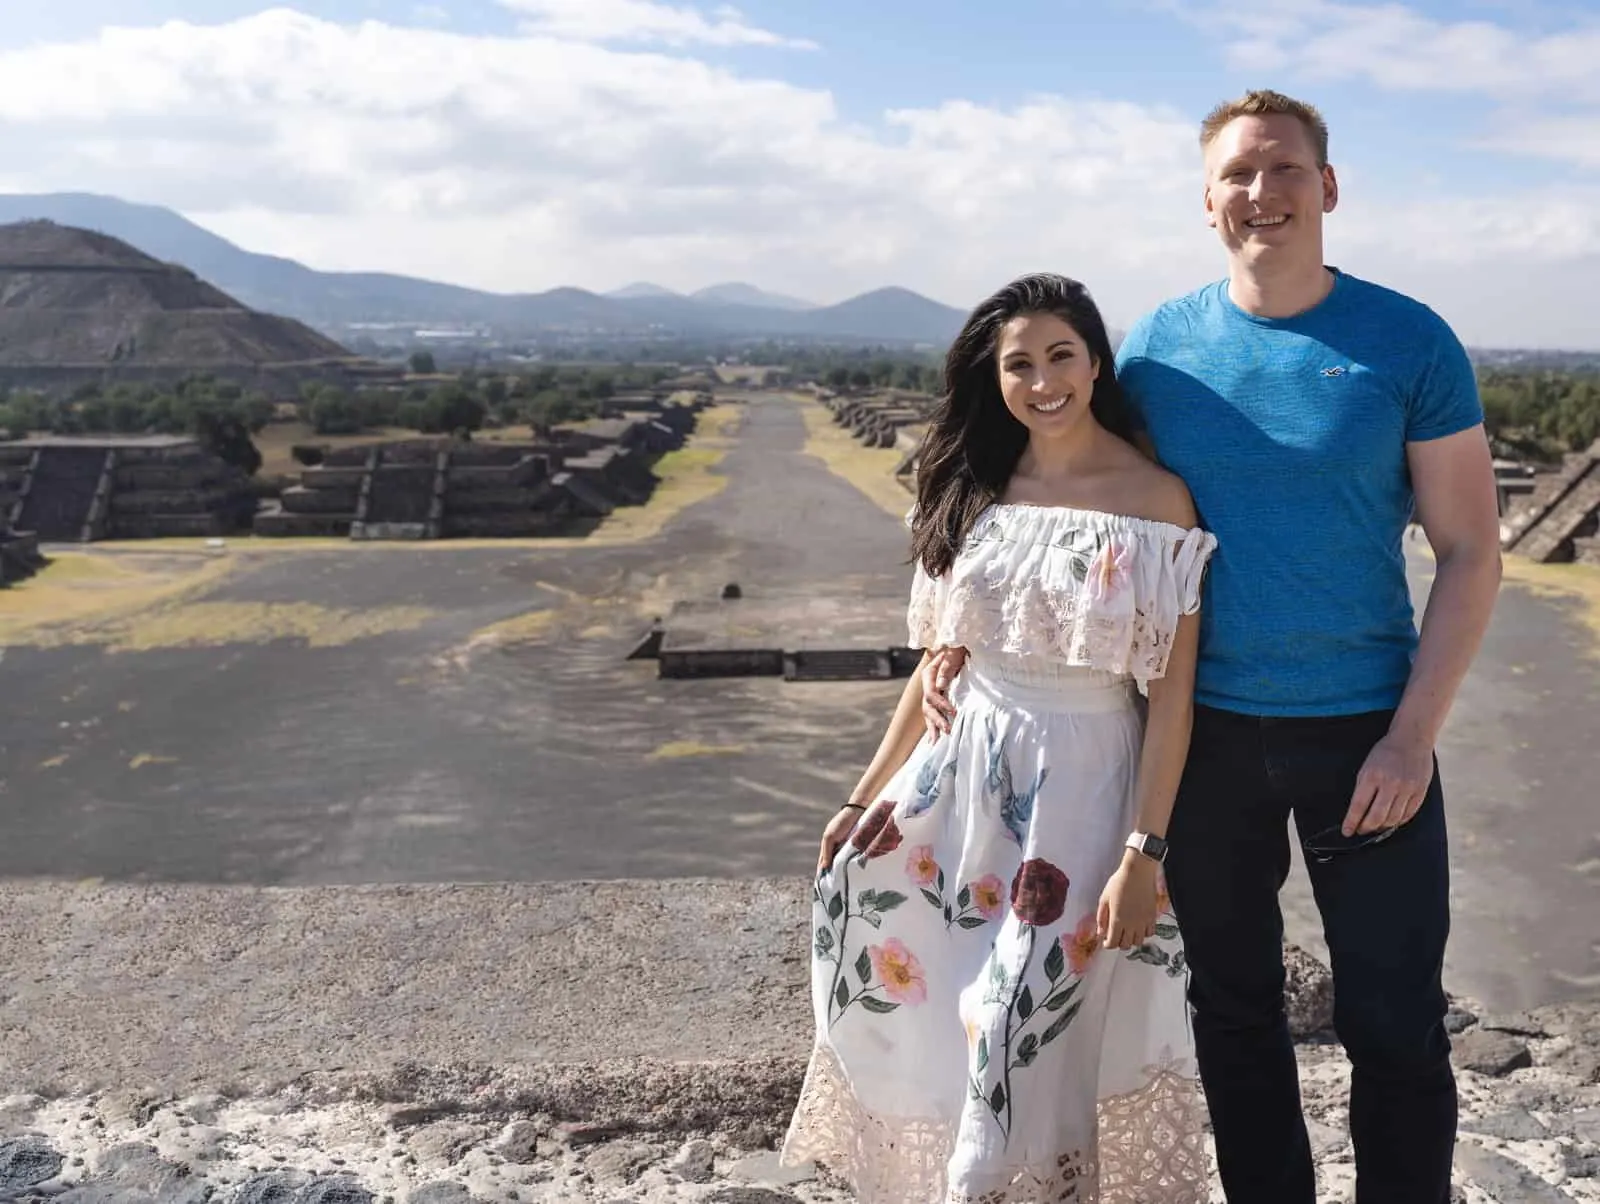 Mexico City Guide - Travel Blog Instagram Husband